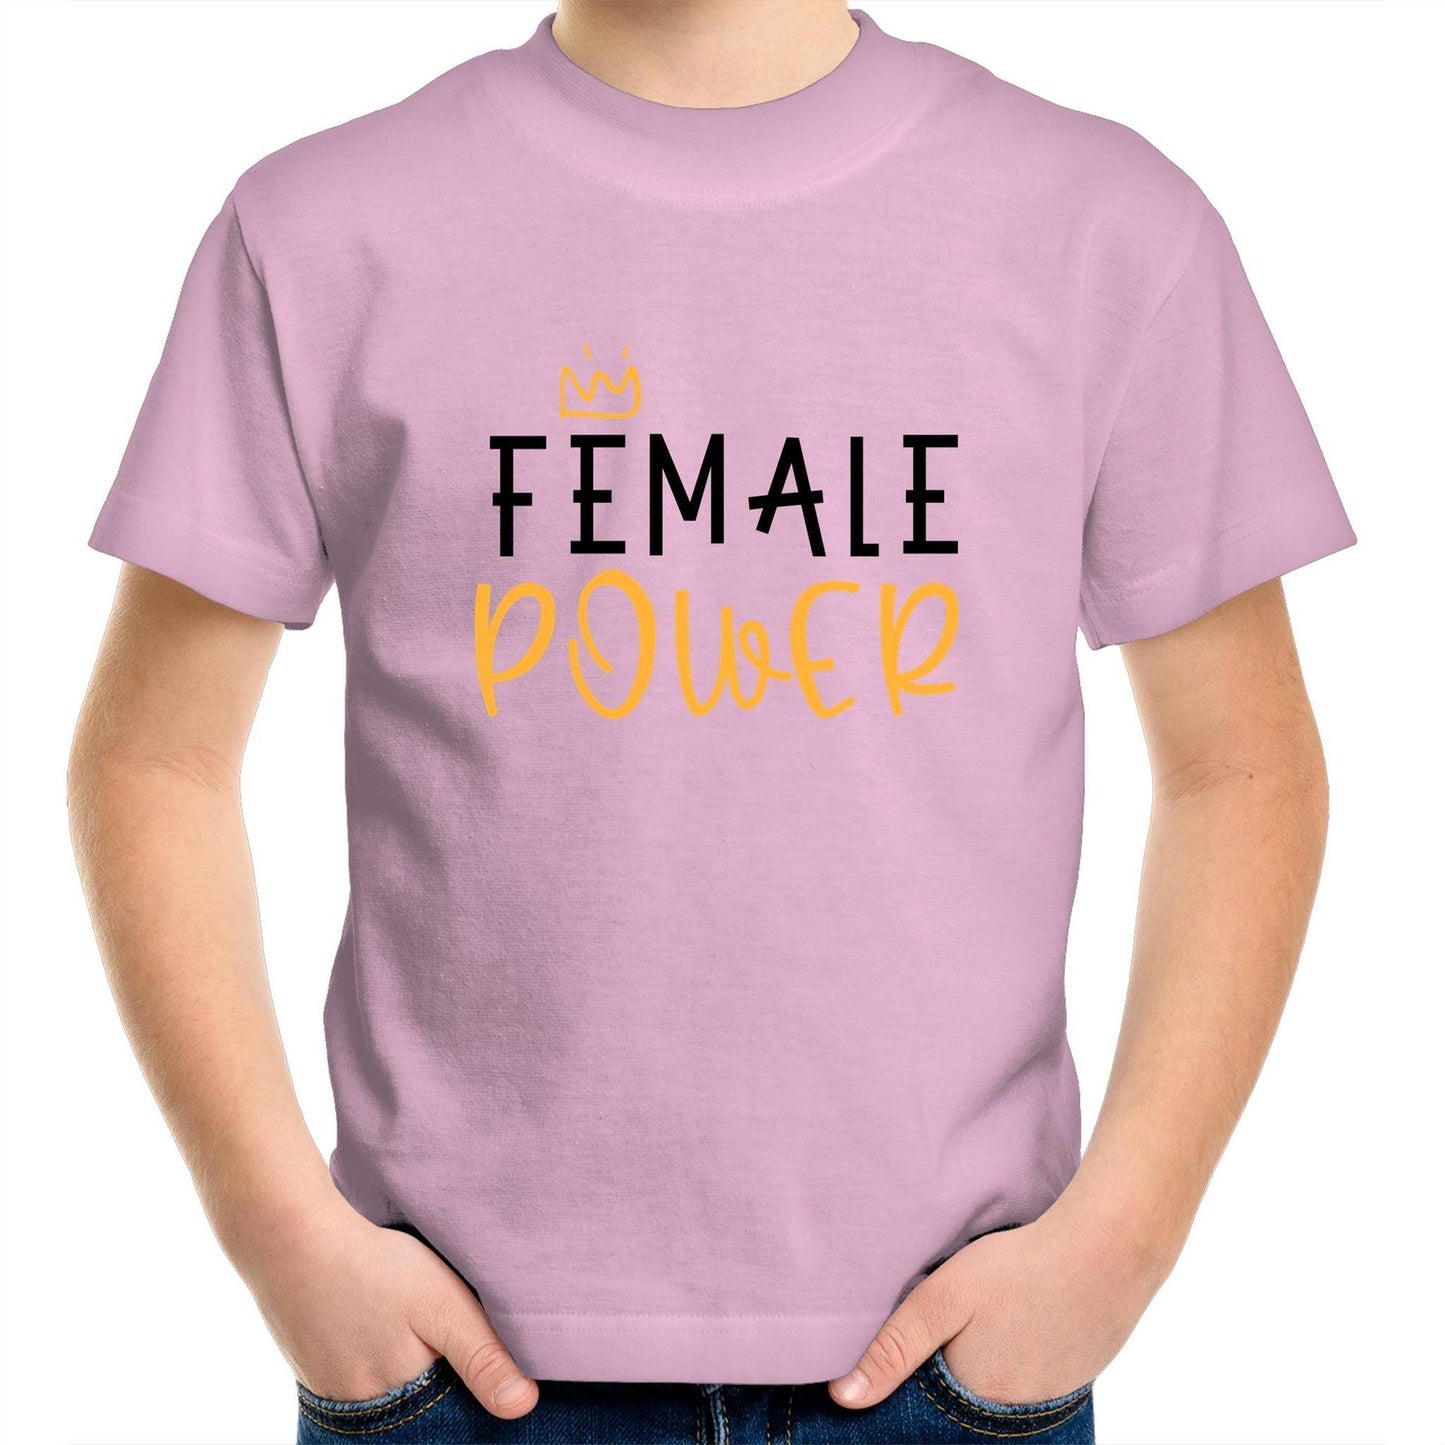 Female Power - Kids Youth Crew T-Shirt Pink Kids Youth T-shirt